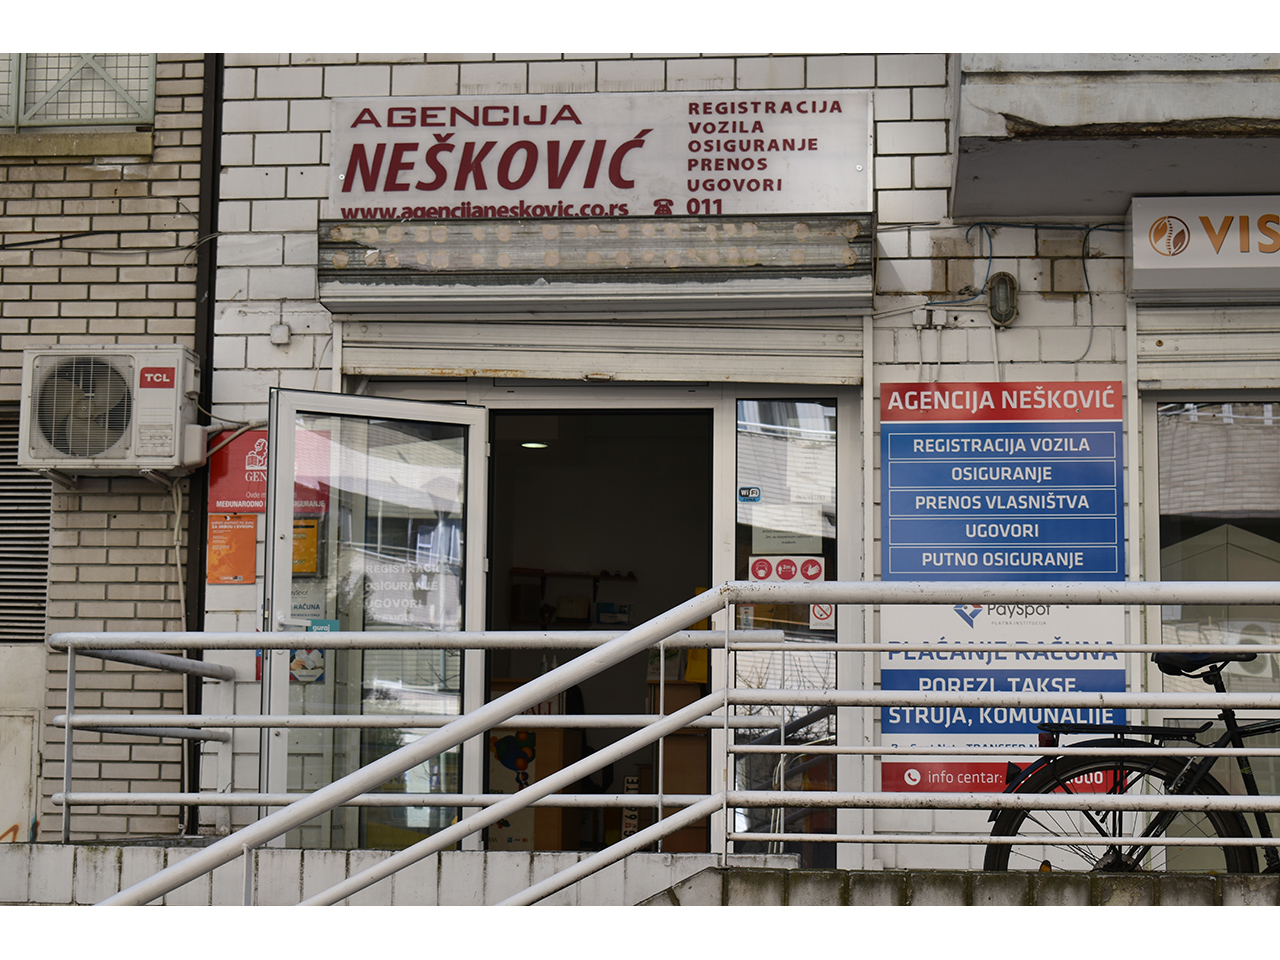 Photo 2 - AGENCY NESKOVIC Car registration Belgrade